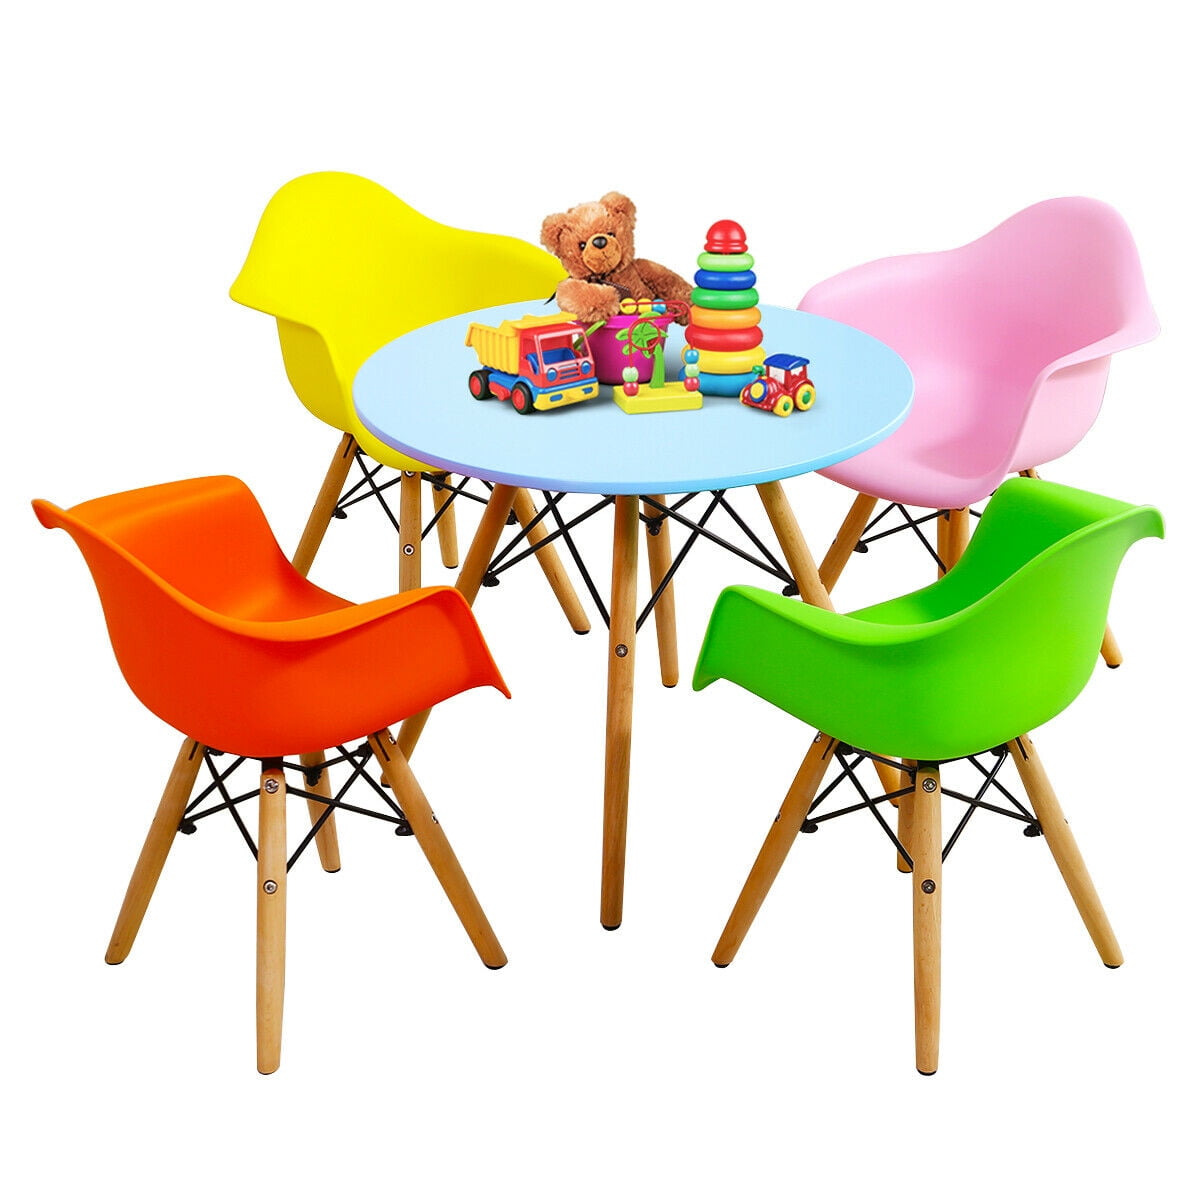 Gymax 5 Pc Kids Modern Colorful Round Table Chair Set With 4 Arm Chairs Walmartcom Walmartcom